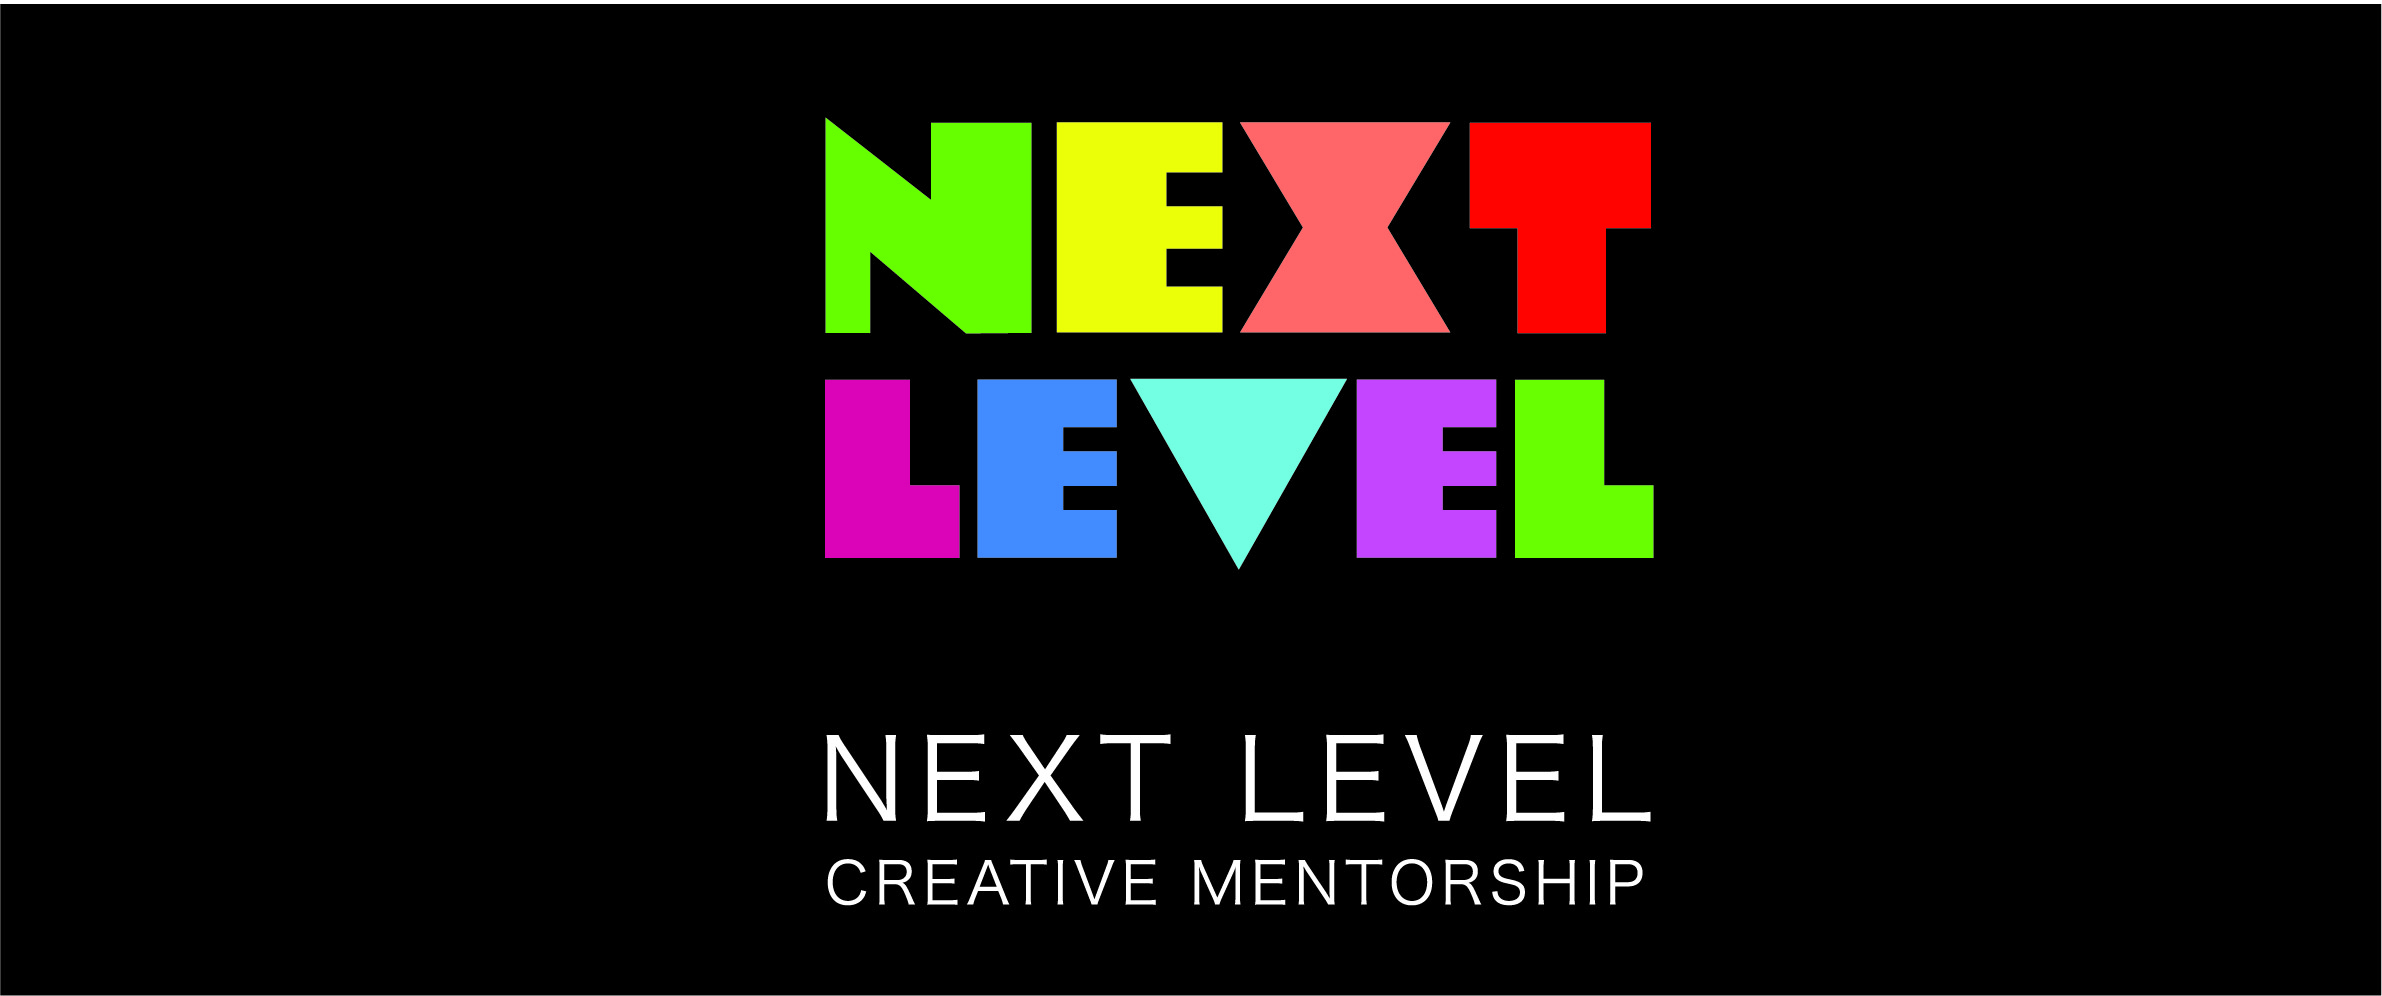 Next Level Creative Mentorship text logo